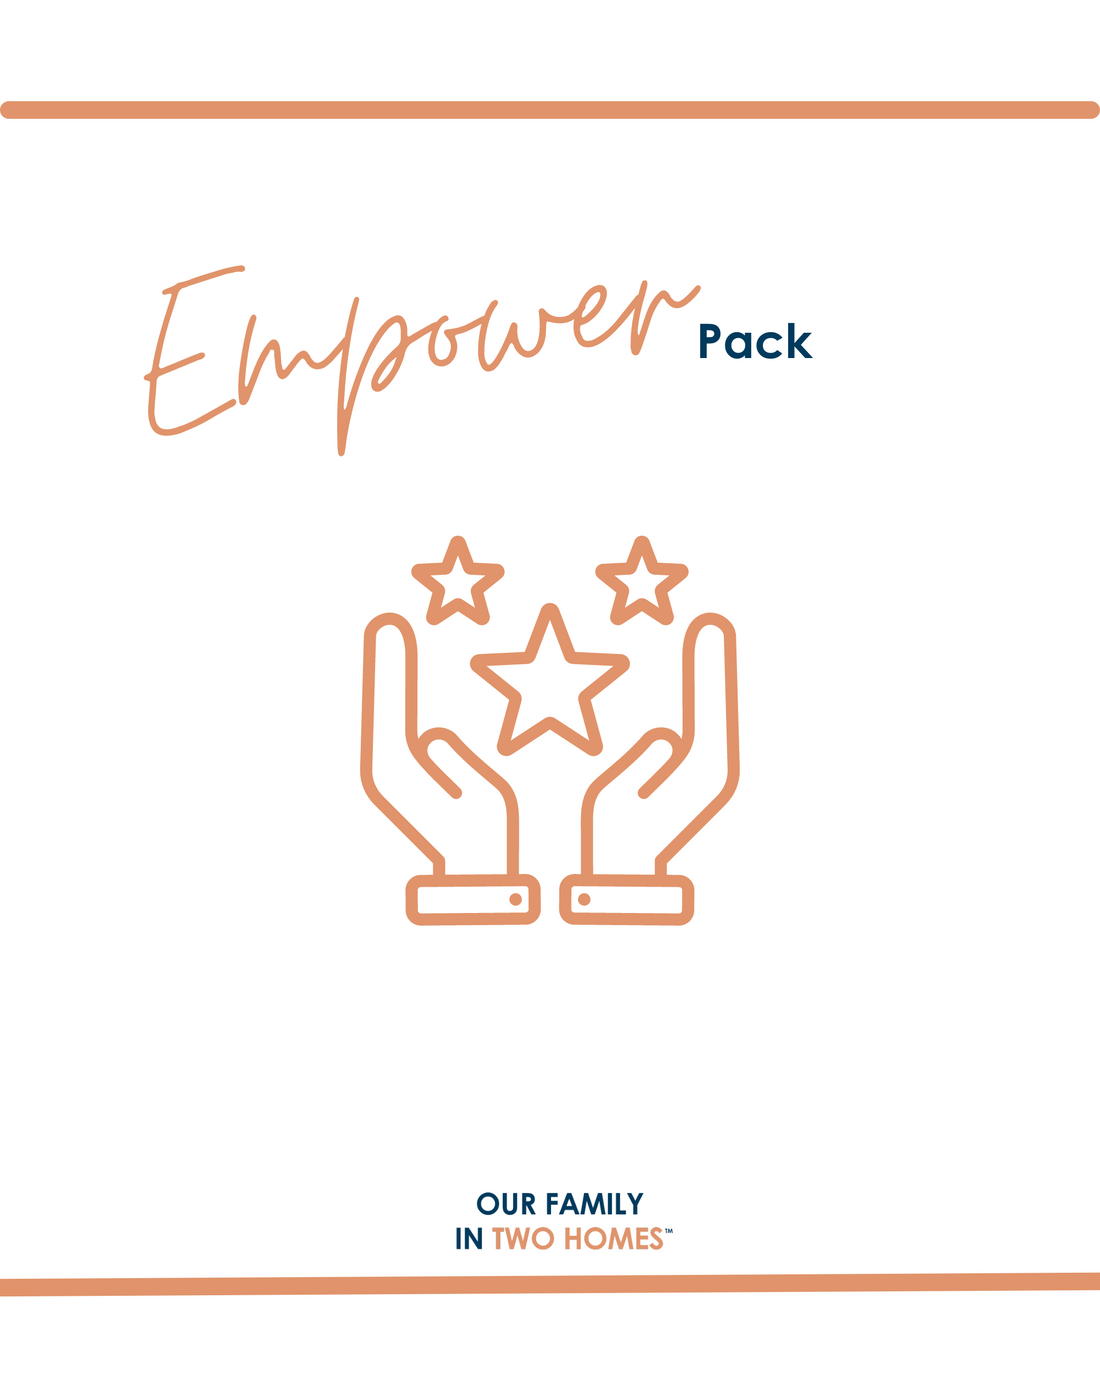 Empower Pack